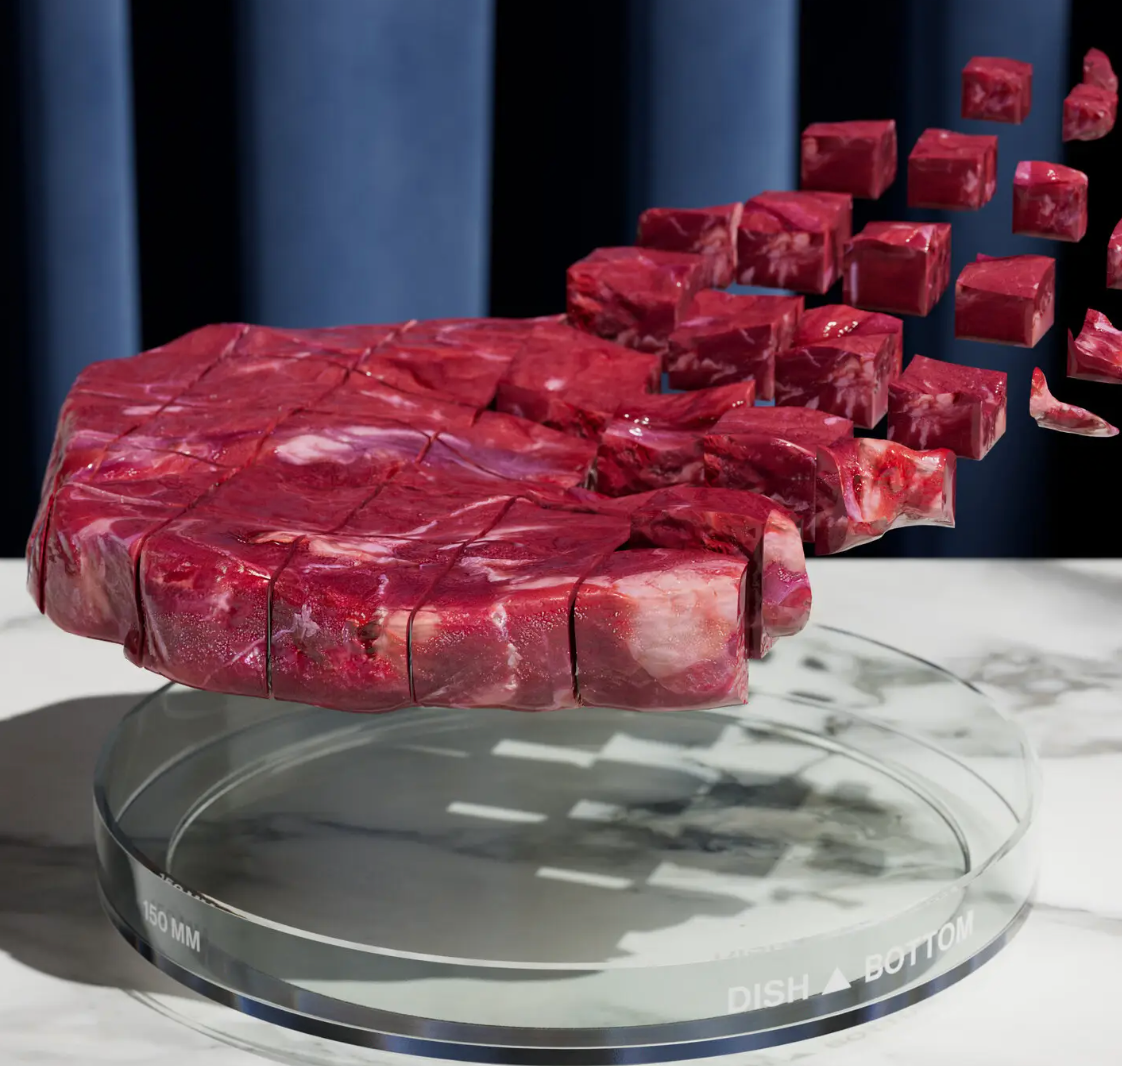 steak cut into cubes over a petri dish